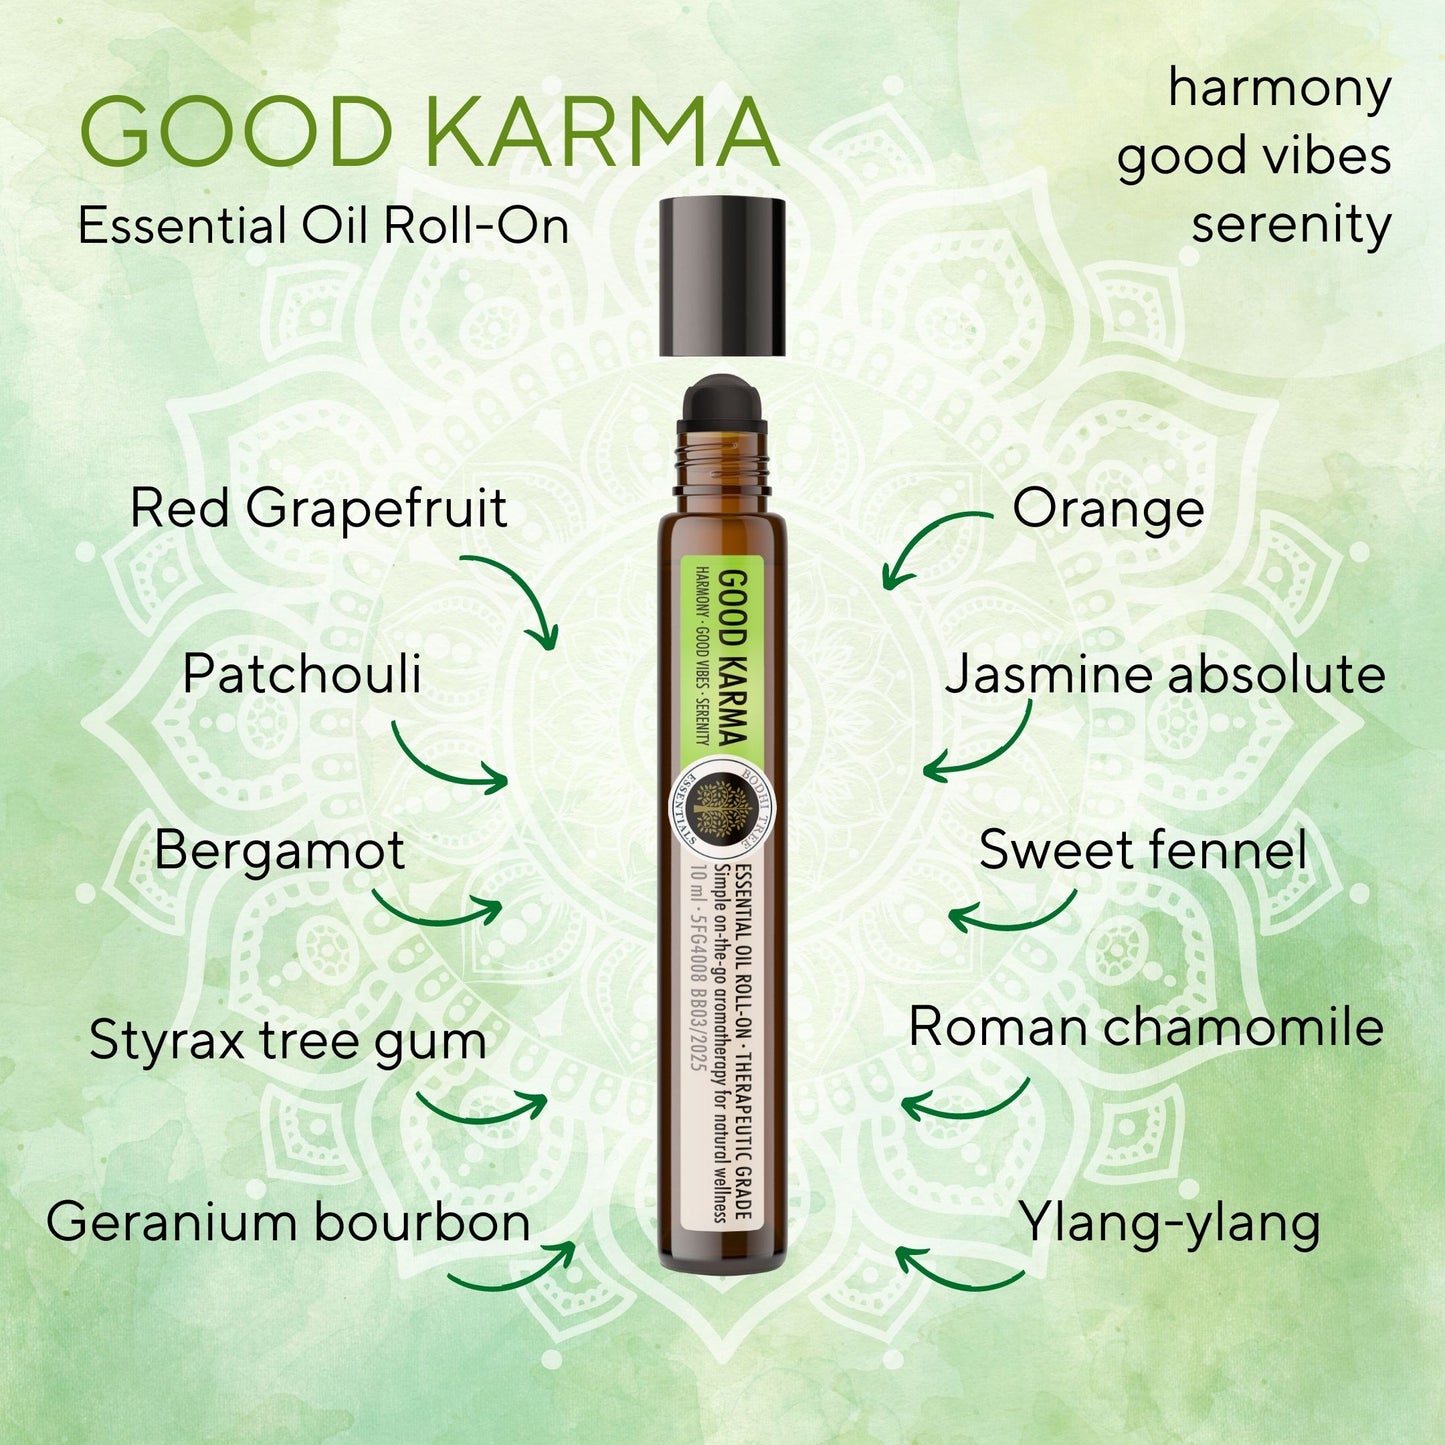 Bodhi Tree Essential Oil Roll-On Good Karma